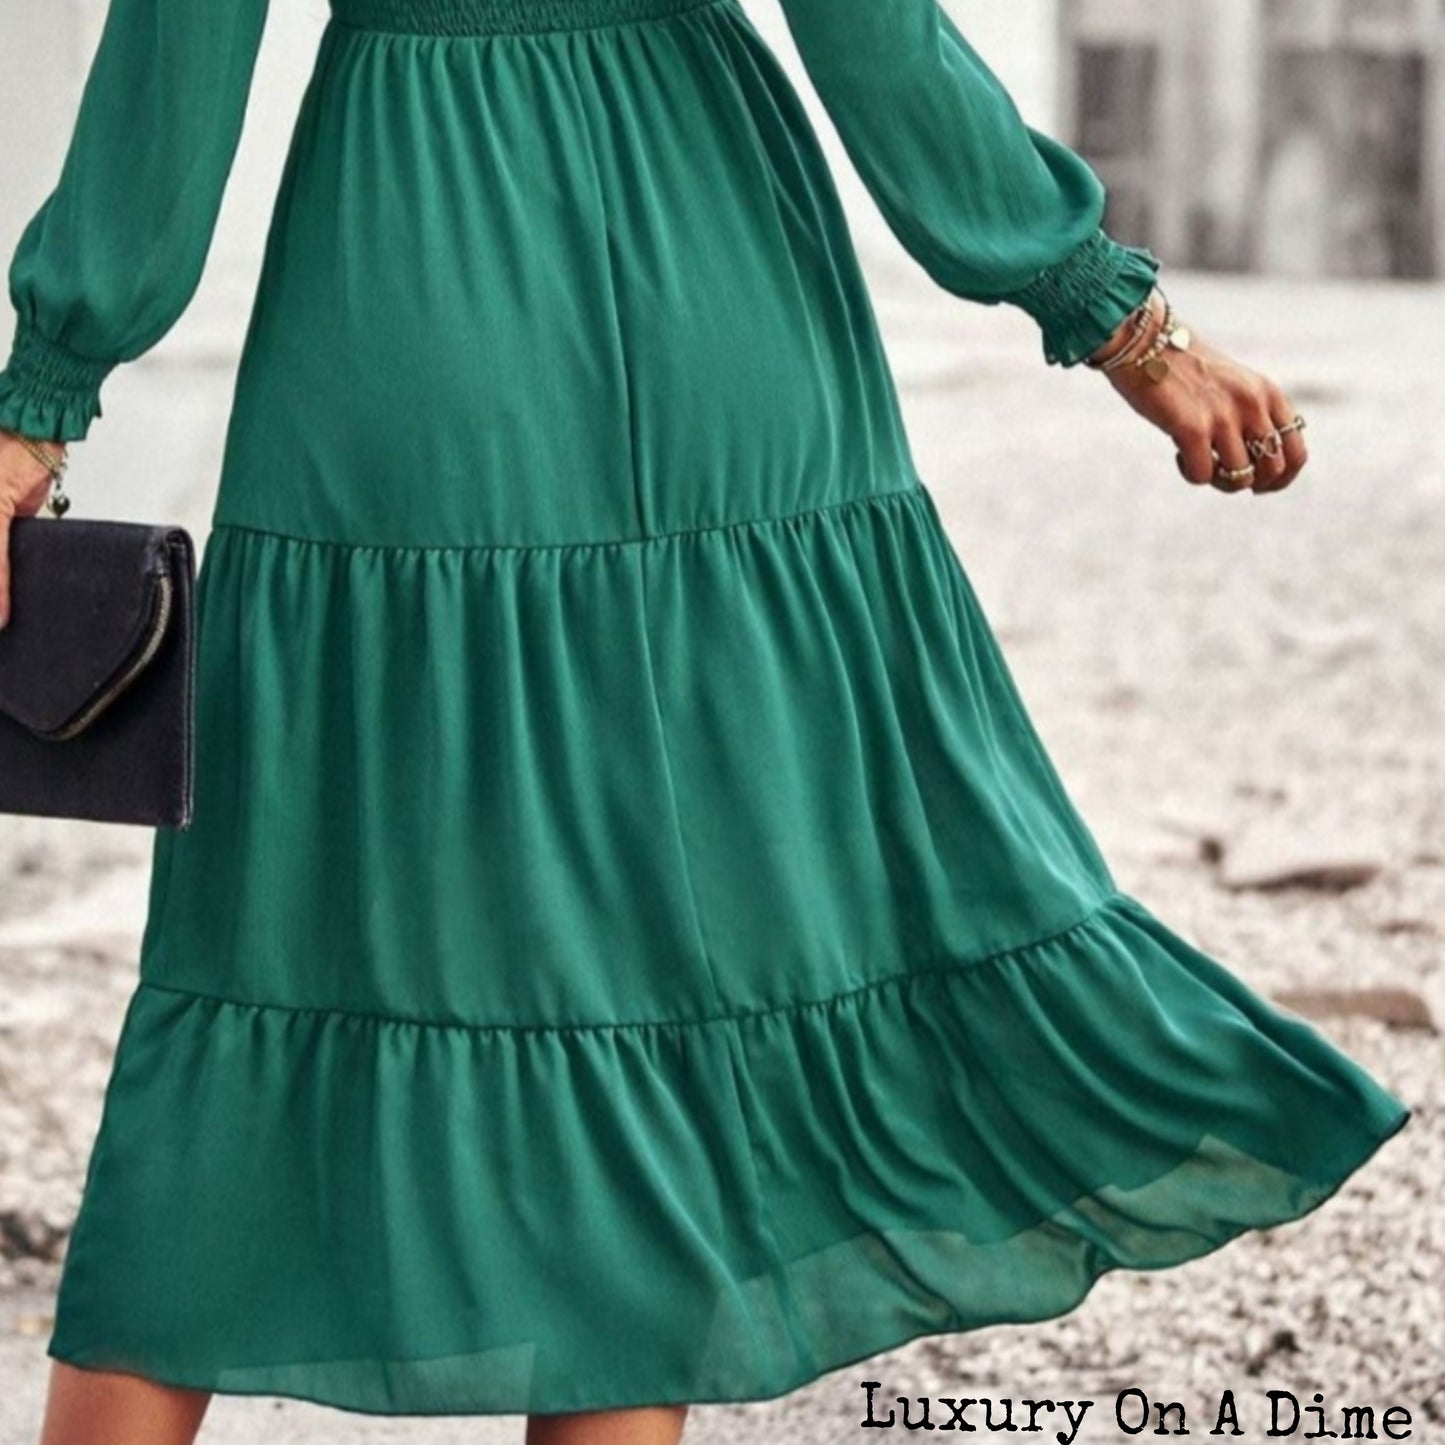 Elegant Smocked Bodice Flounce Long Sleeve Lined Midi Dress